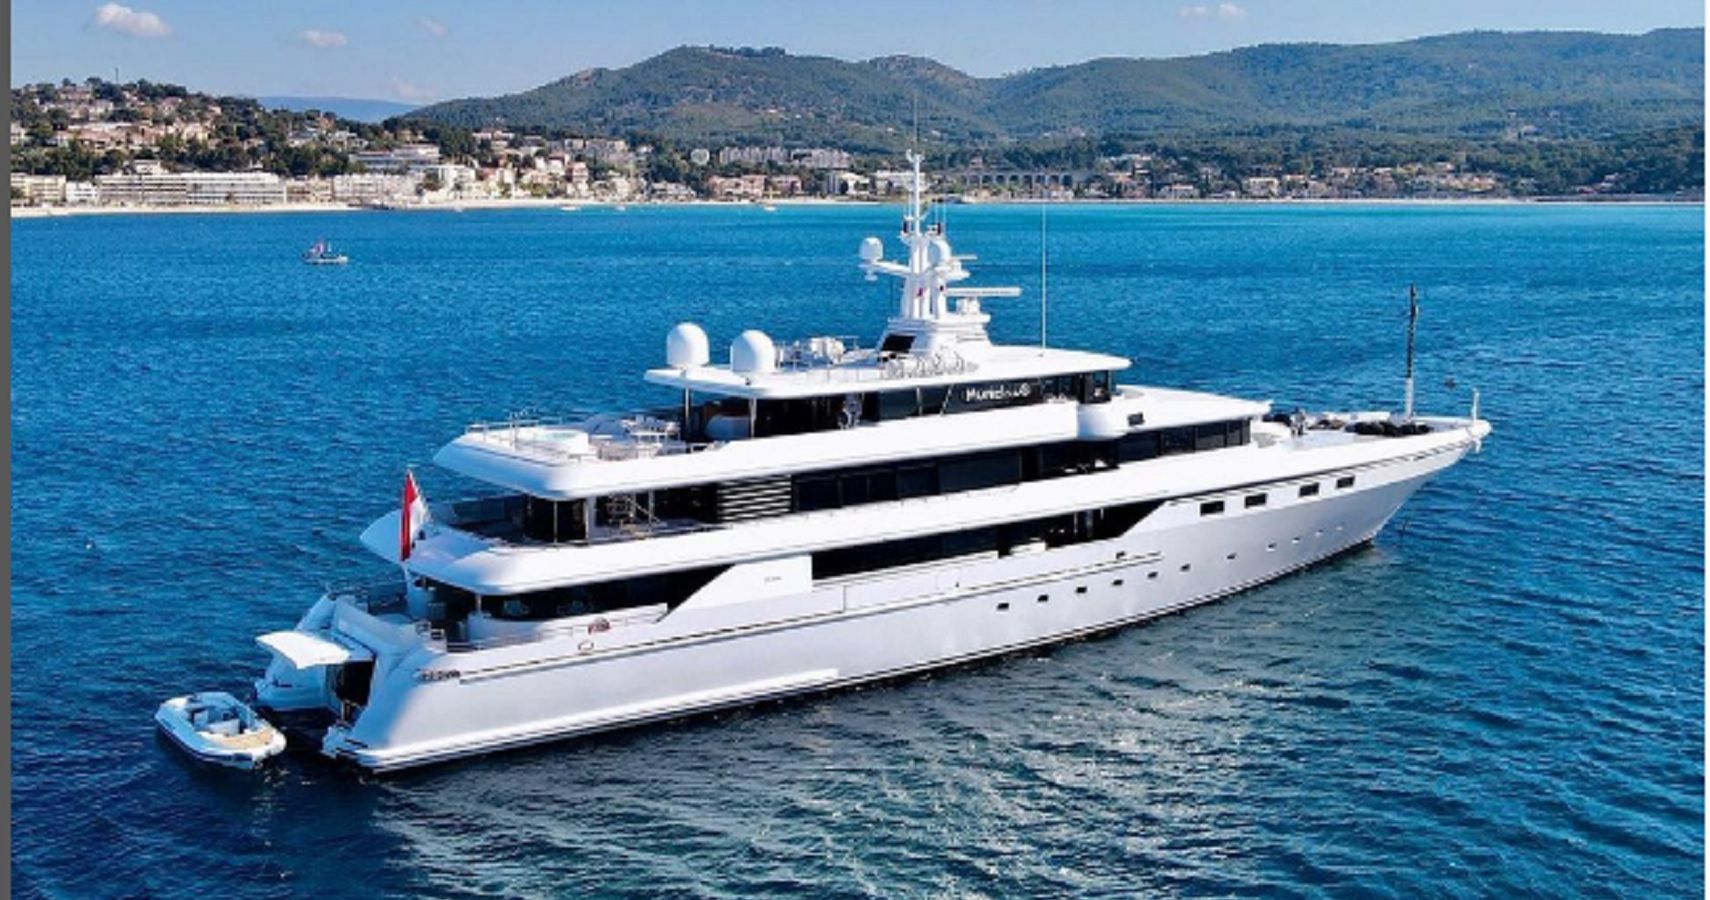 Leonardo Del Vecchio's $40 Million Superyacht